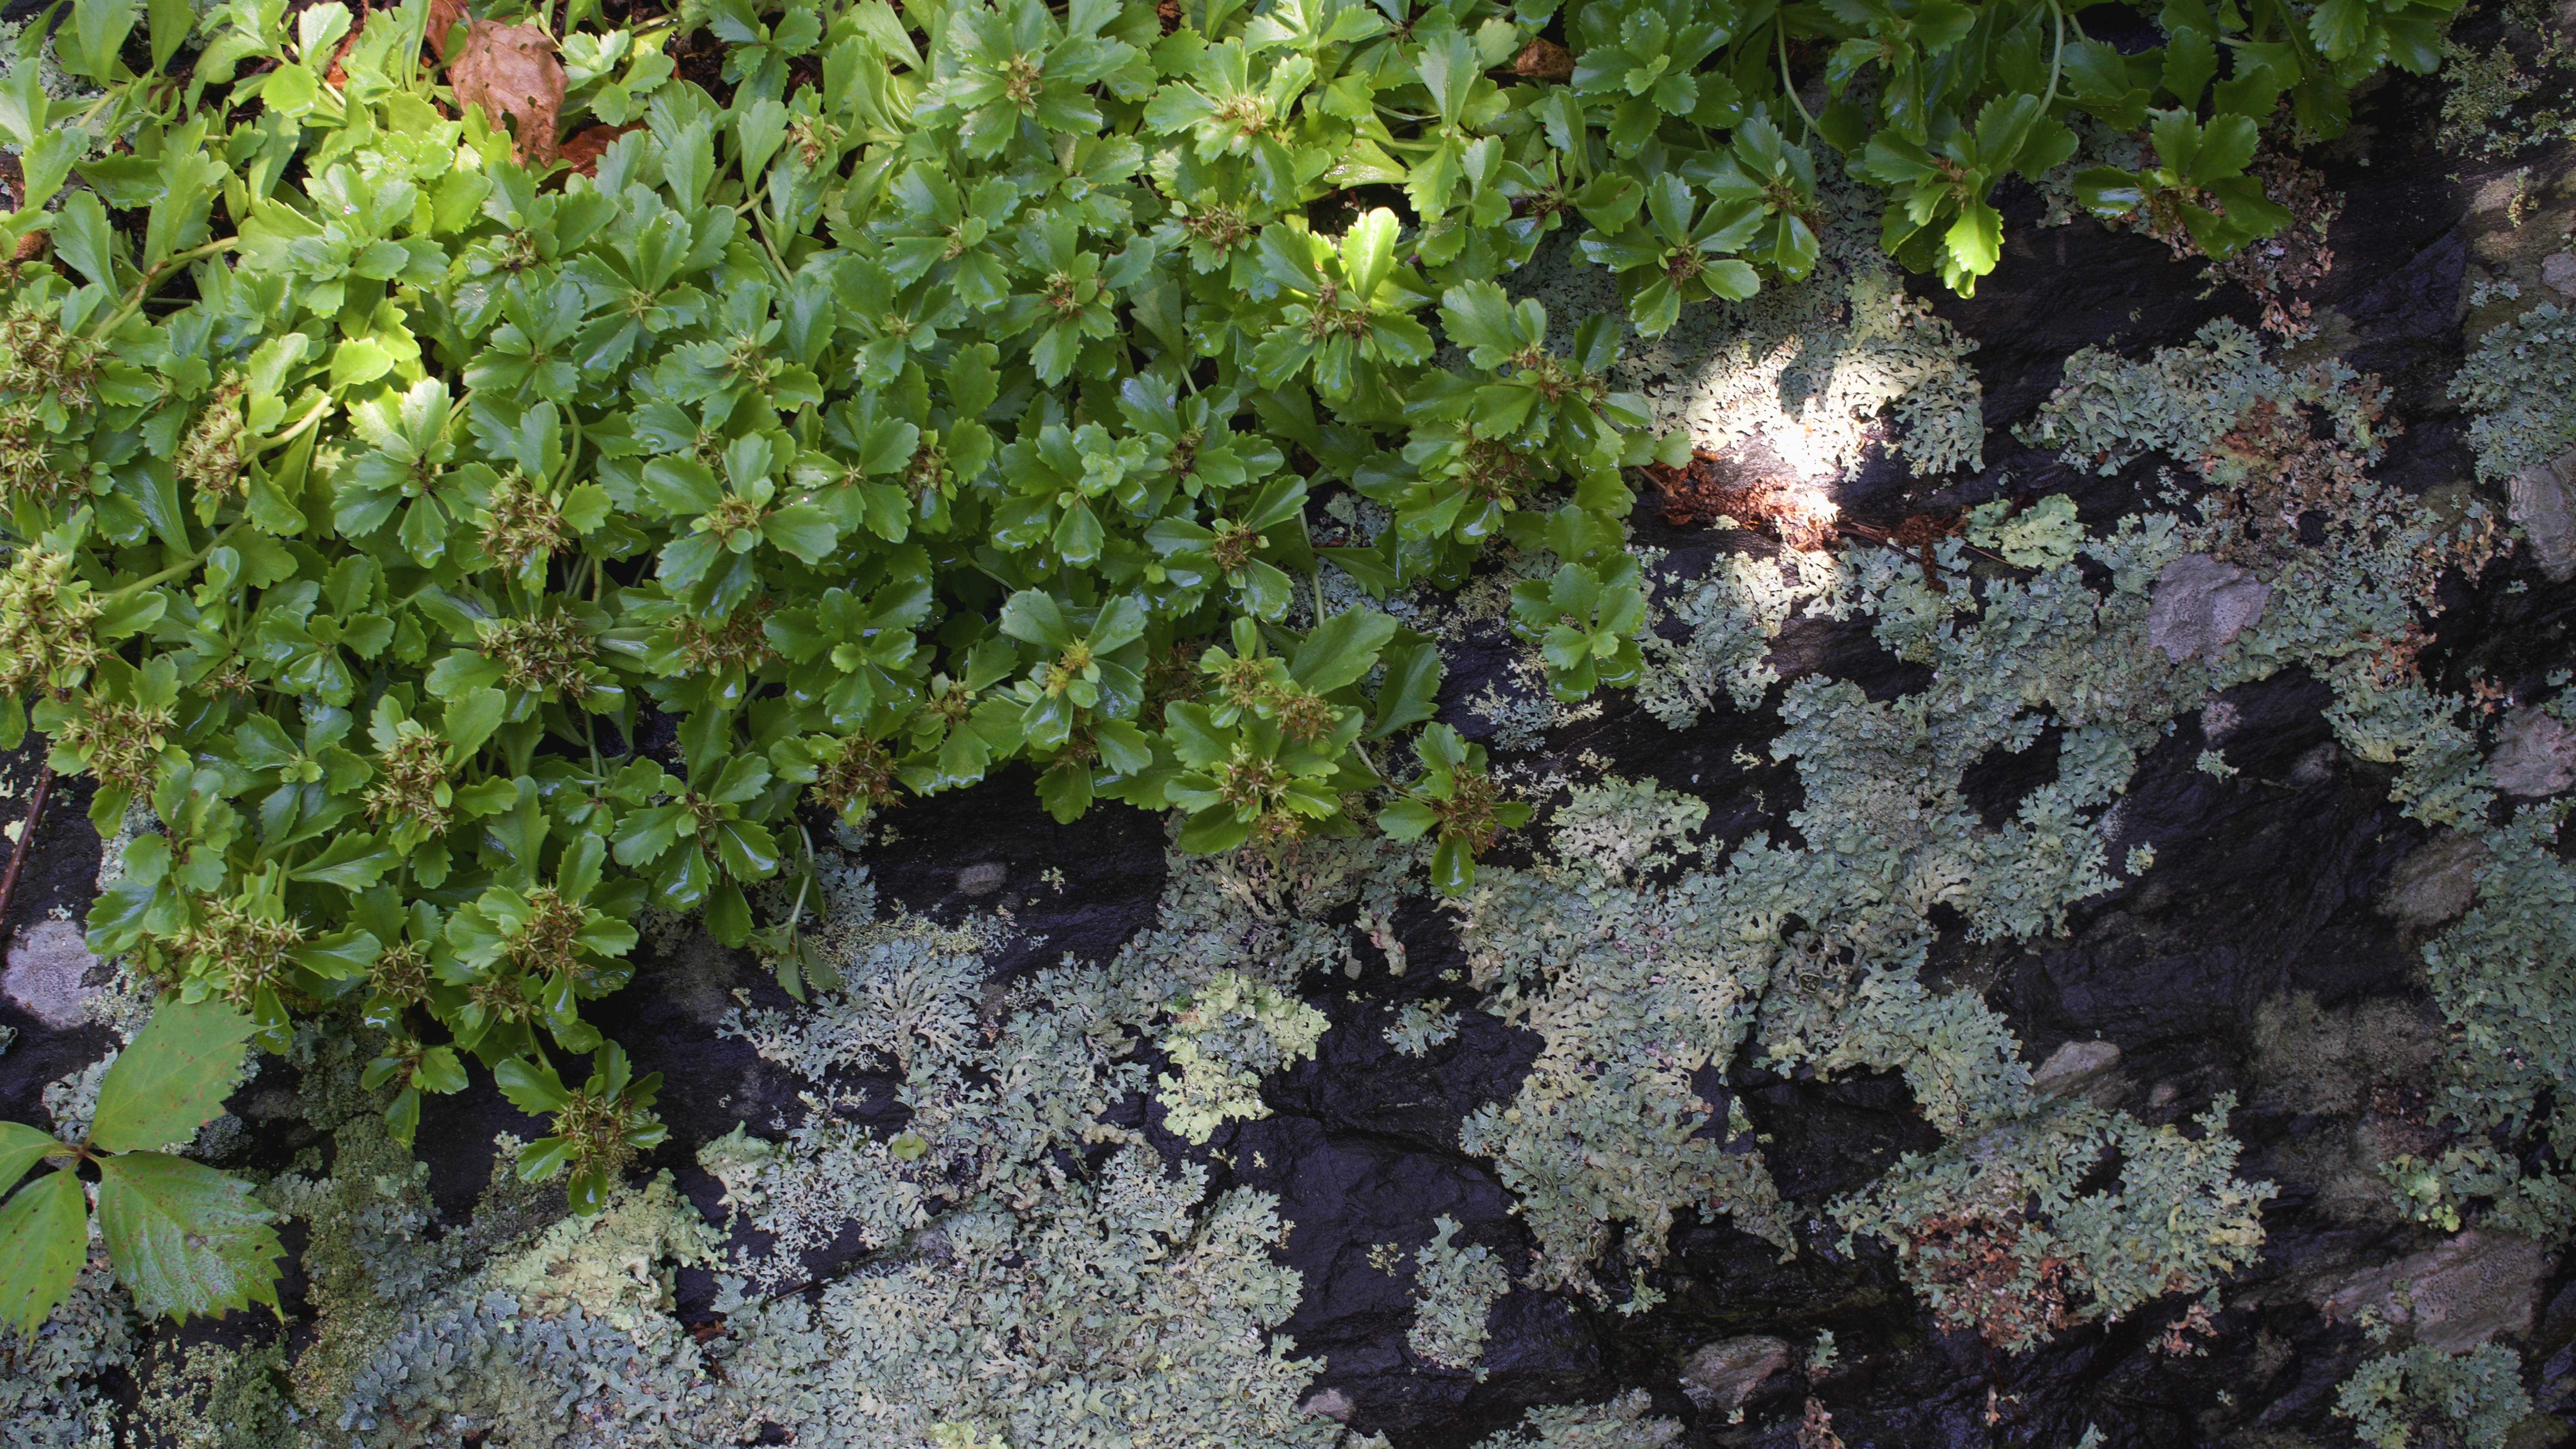 General 6000x3375 plants nature stones lichen